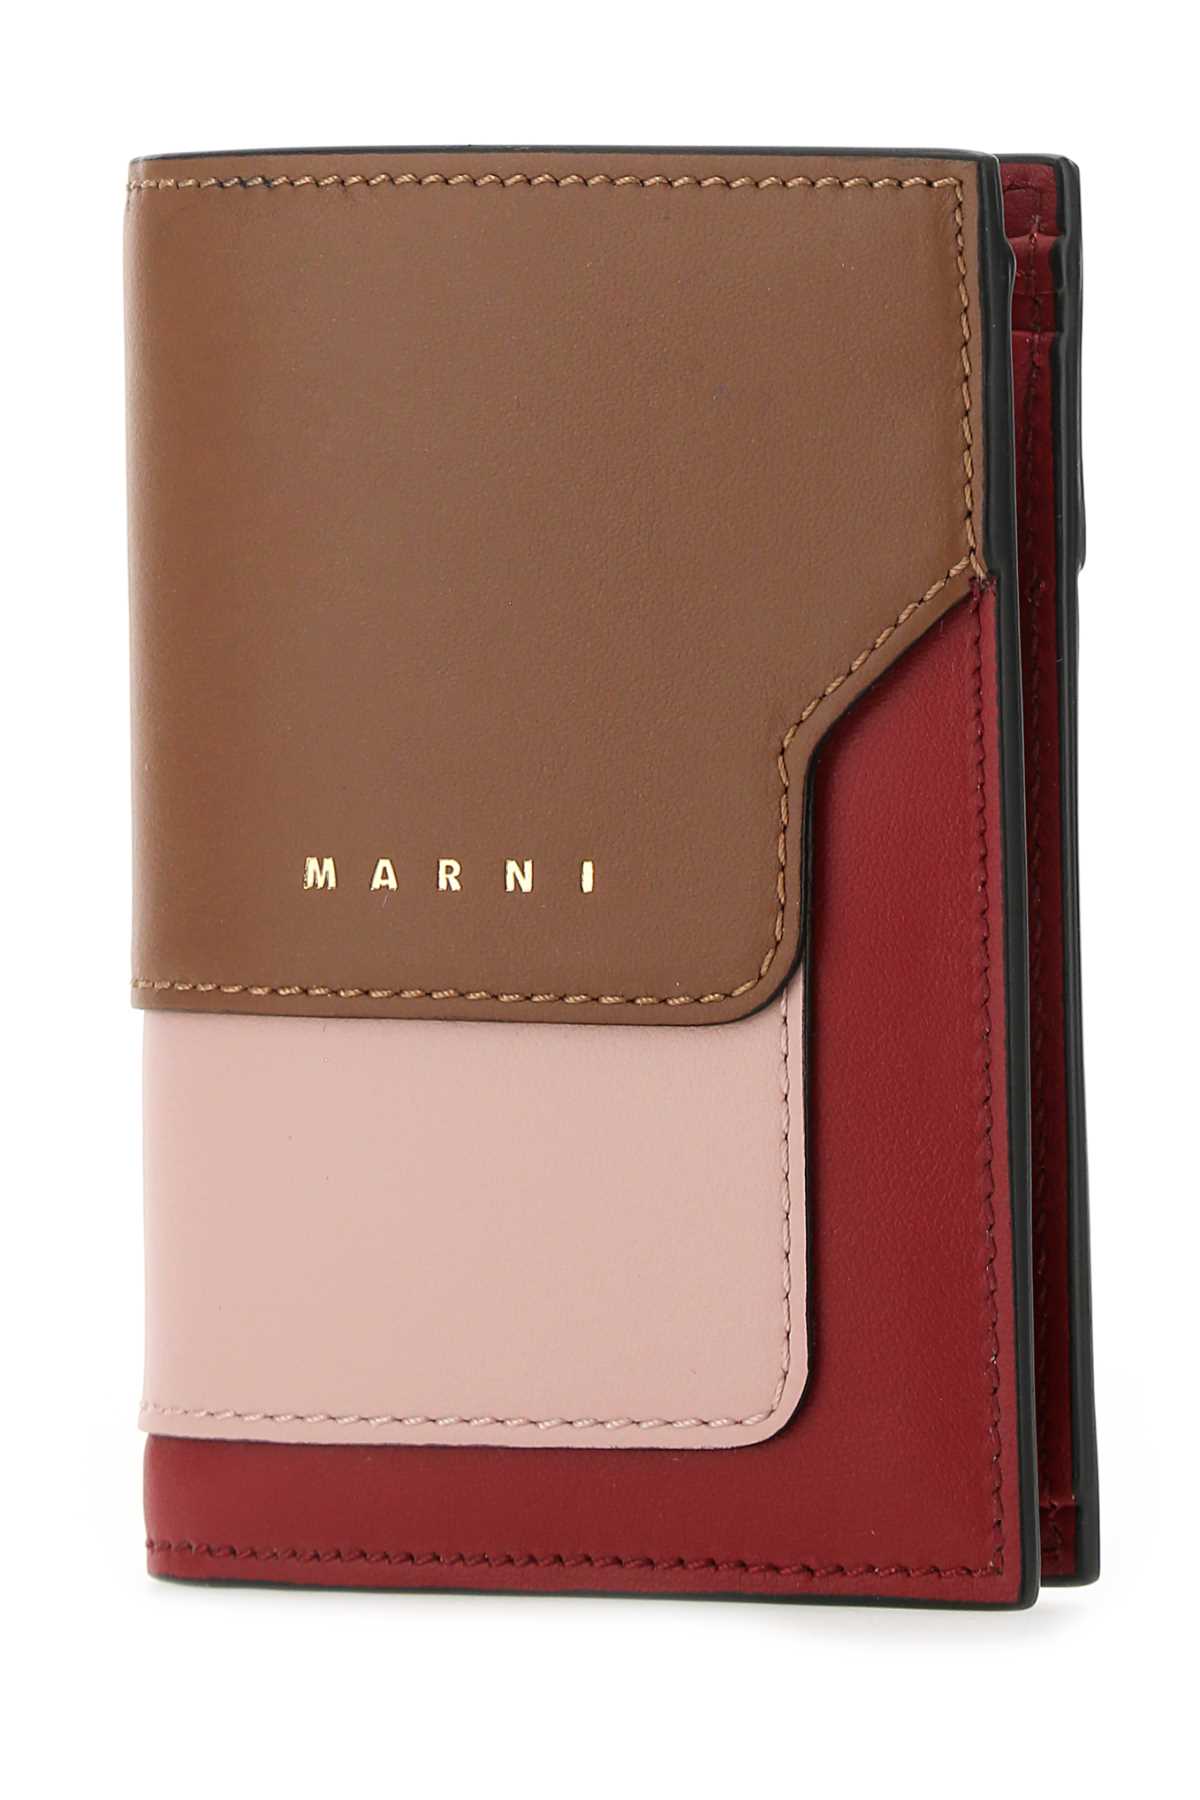 Marni Multicolor Leather Wallet In Z474n